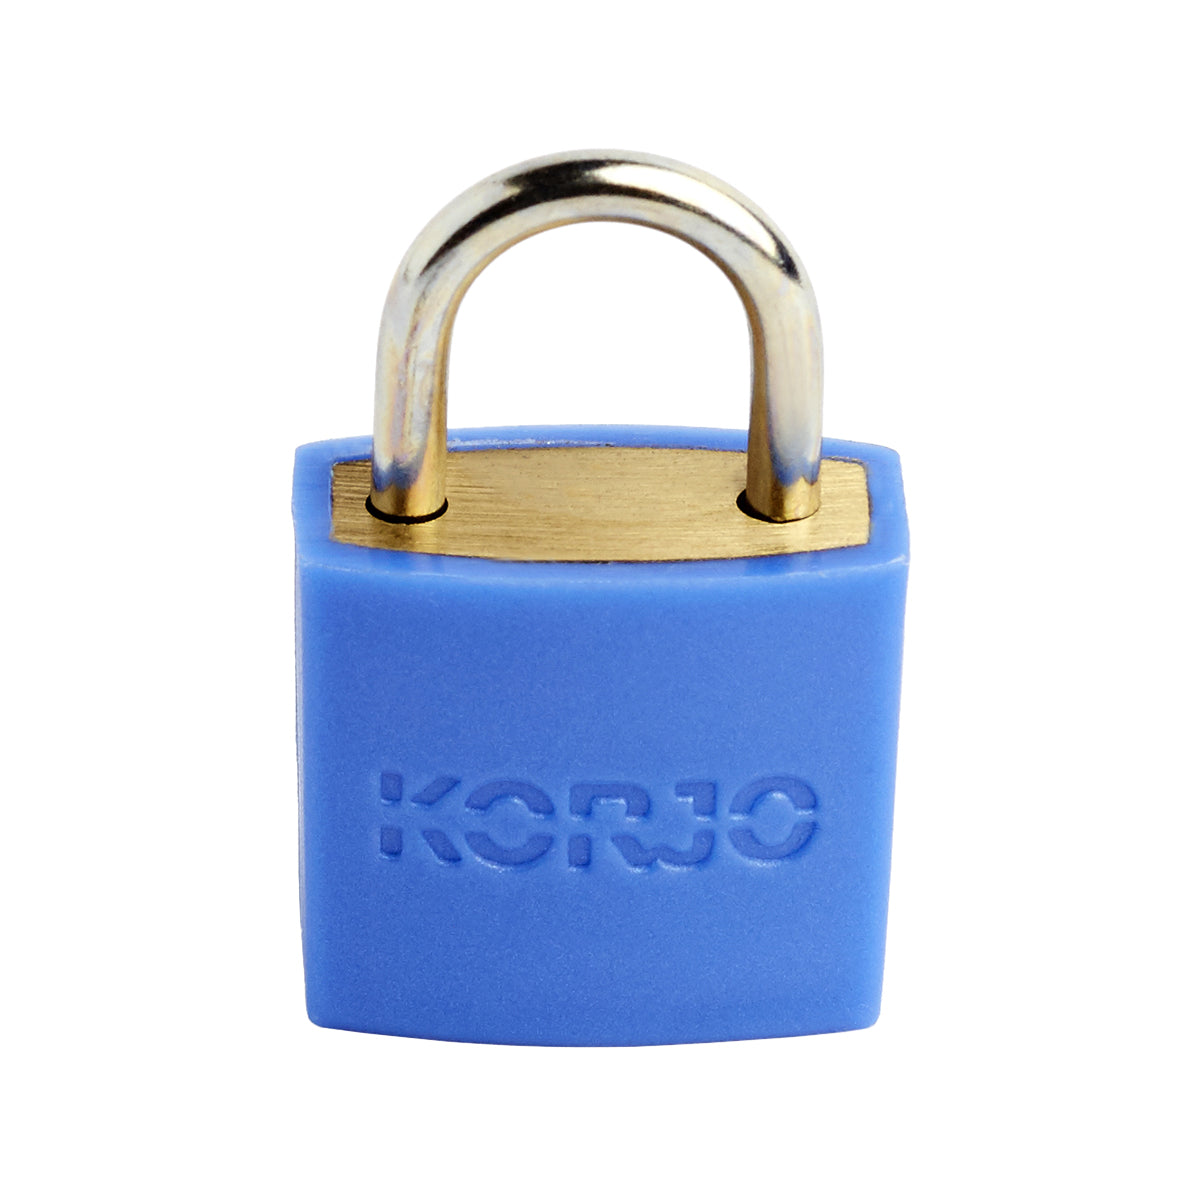 Korjo Colourful Luggage Locks - 2 Pack